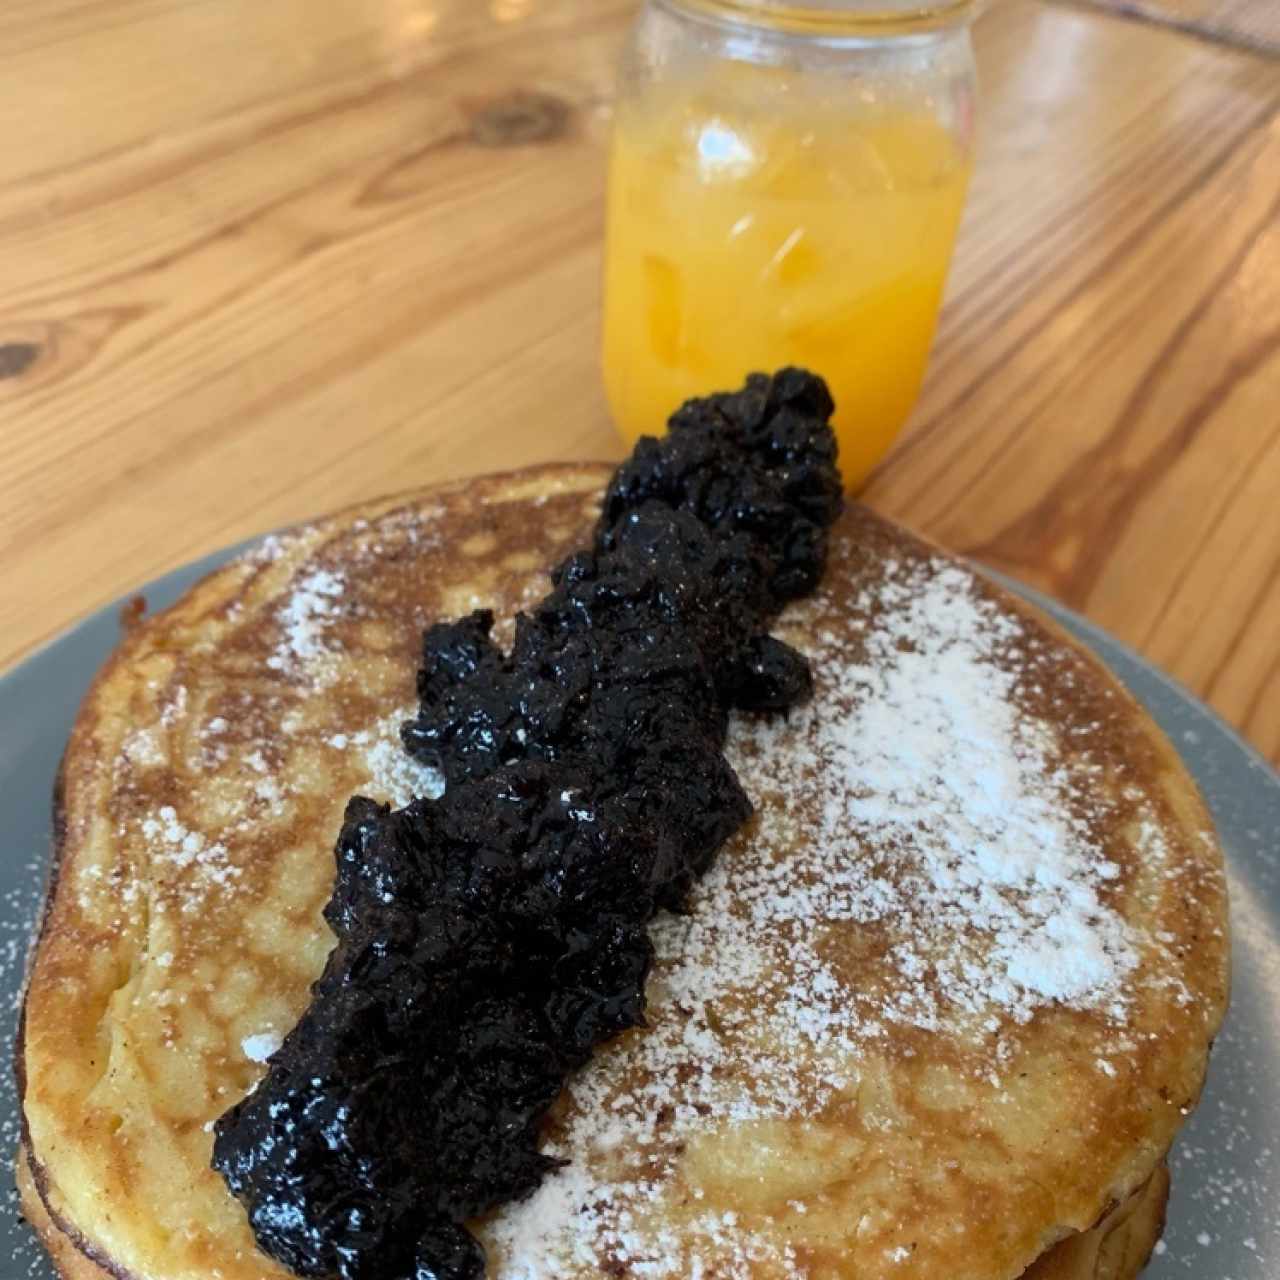 pancakes con blueberry y jugo de naranja